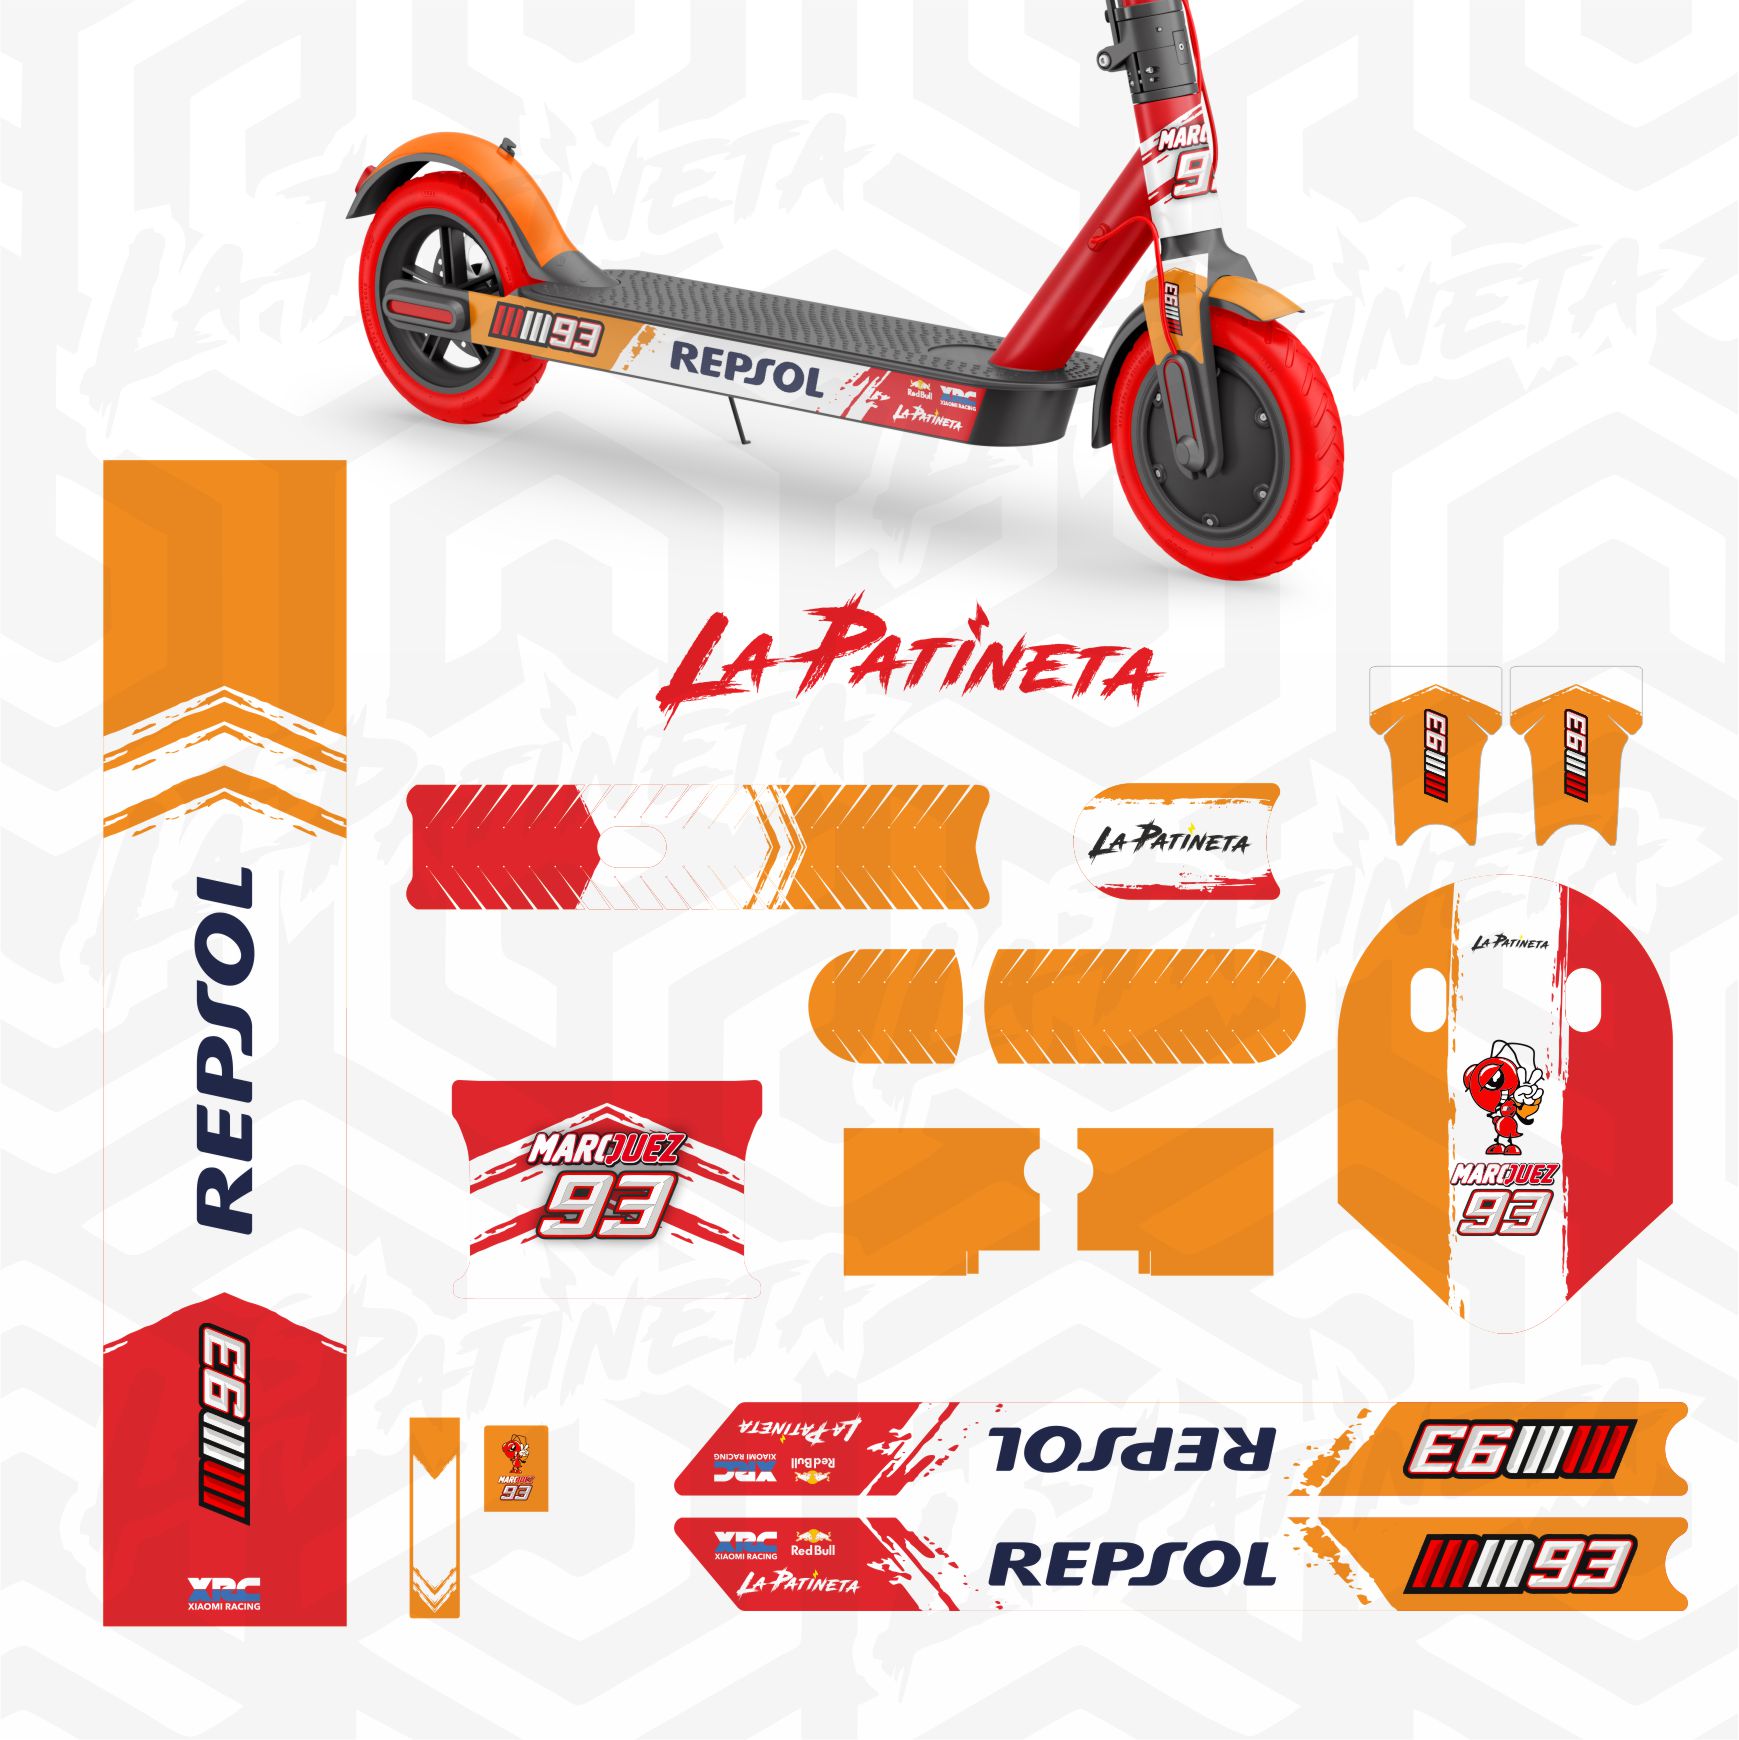 Vinilo Moto Gp1 Repsol Marc Marquez - ⚡ La Patineta ⚡